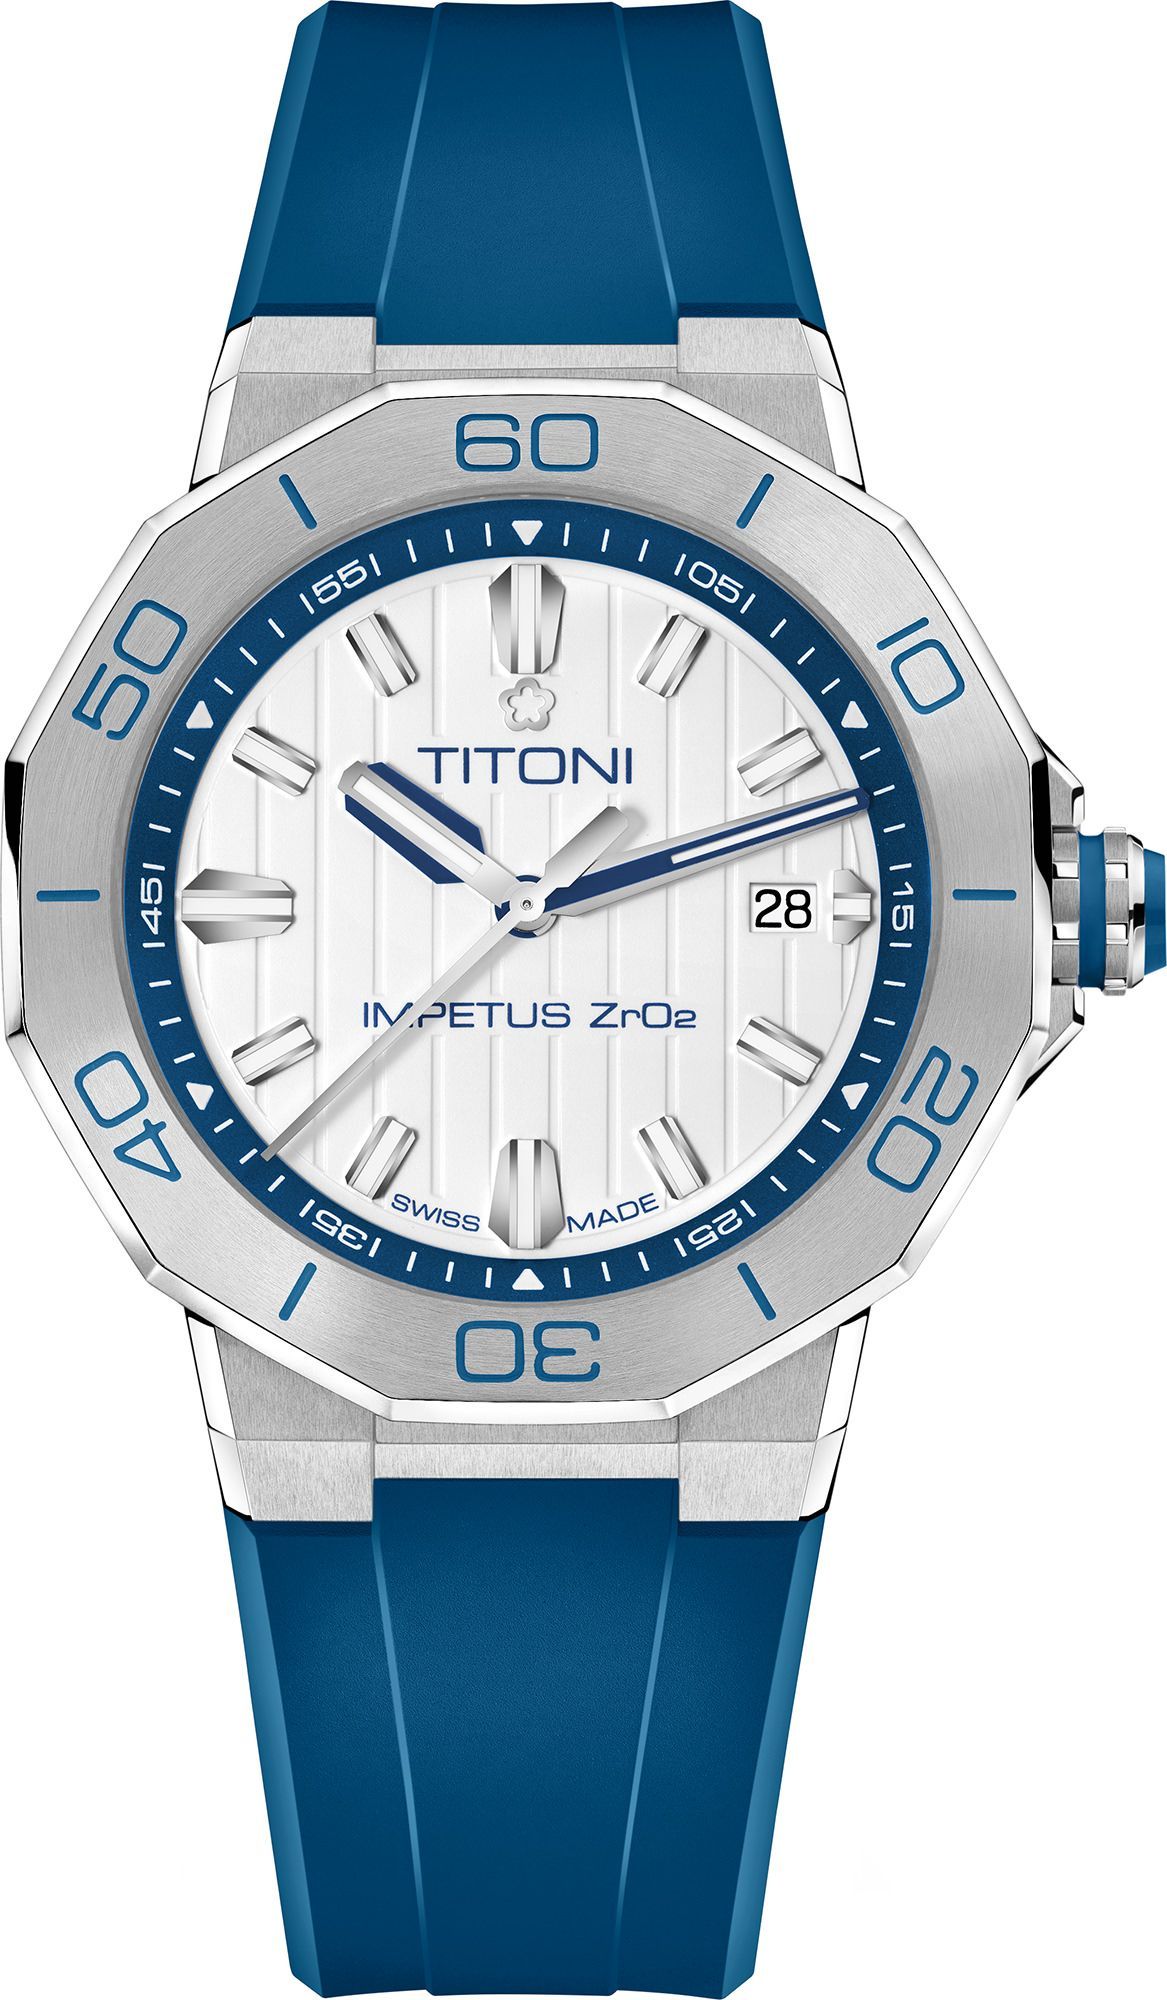 Titoni Impetus CeramTech  White Dial 43 mm Automatic Watch For Men - 1